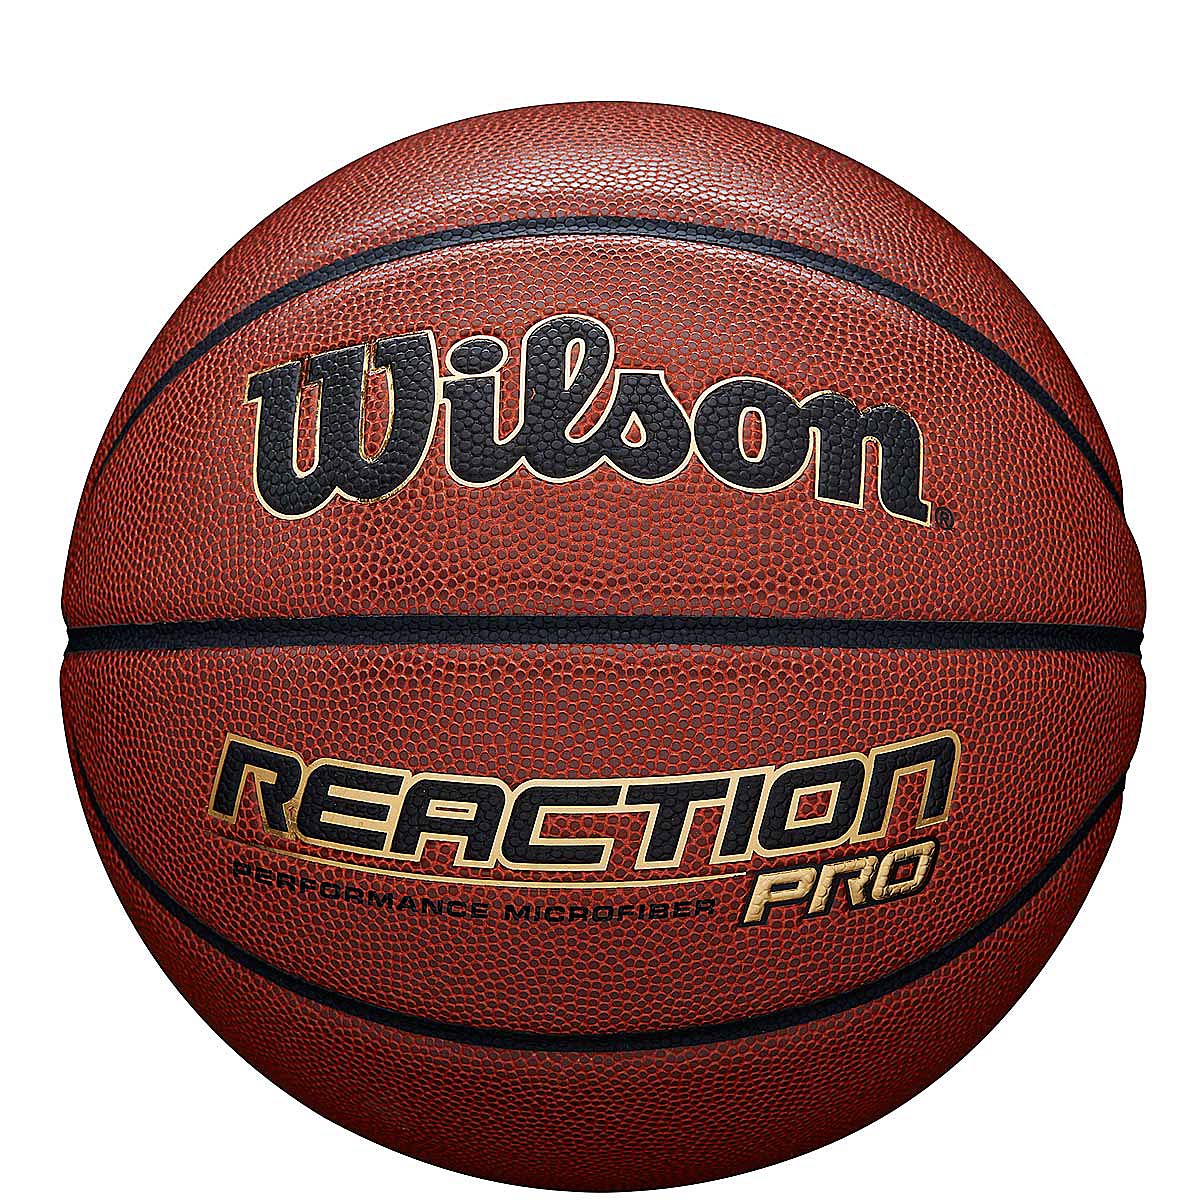 Image of Wilson Reaction Pro 285 Basketball, Brown